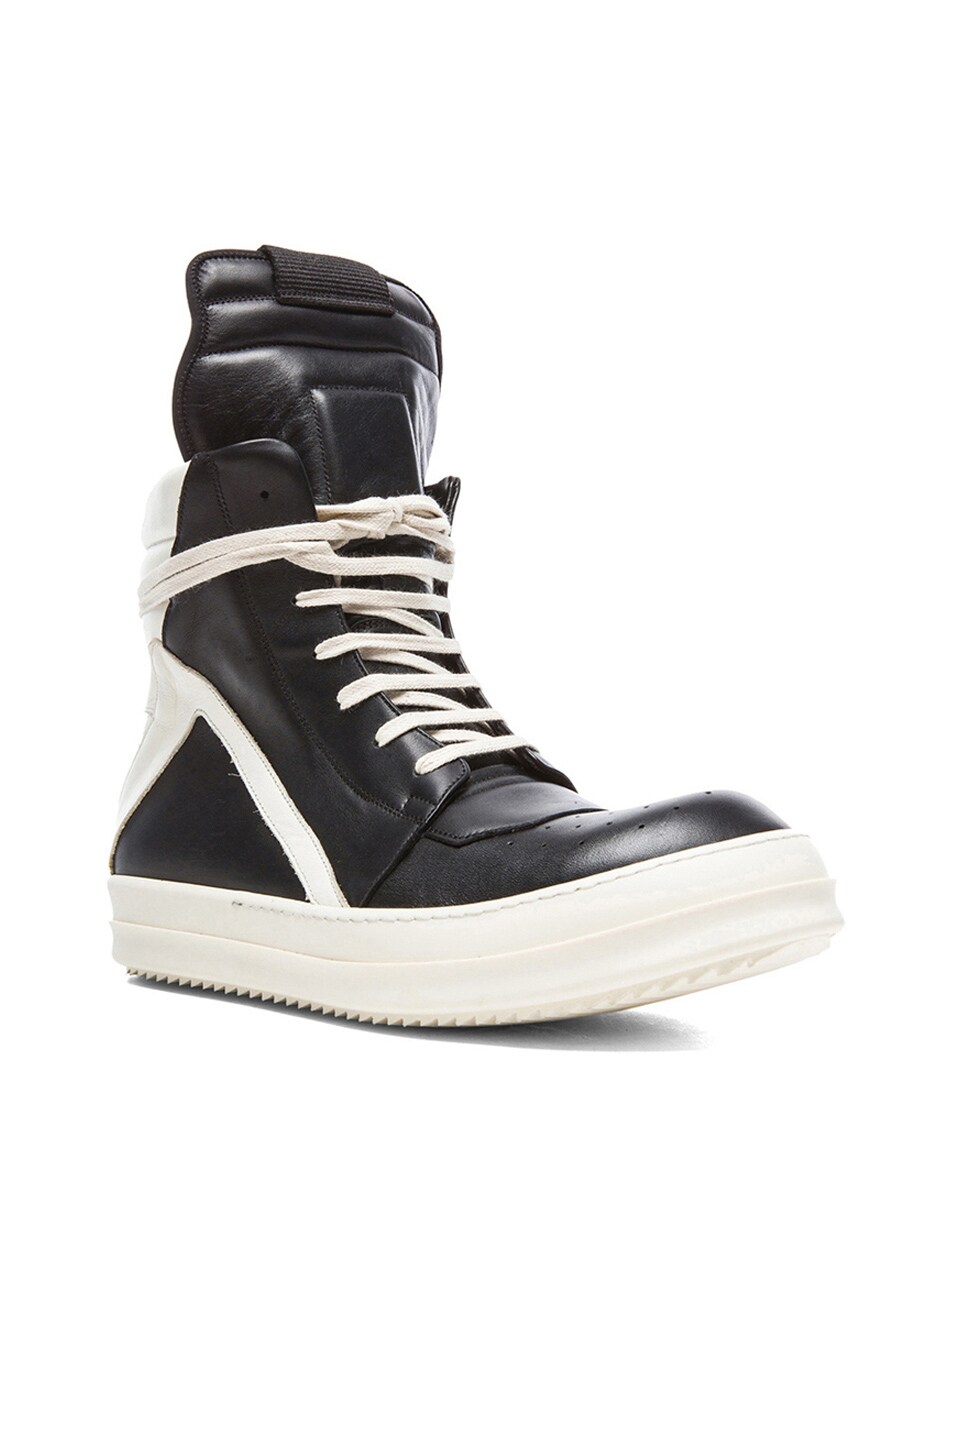 Image 1 of Rick Owens Geobasket Leather Sneakers in Black & White